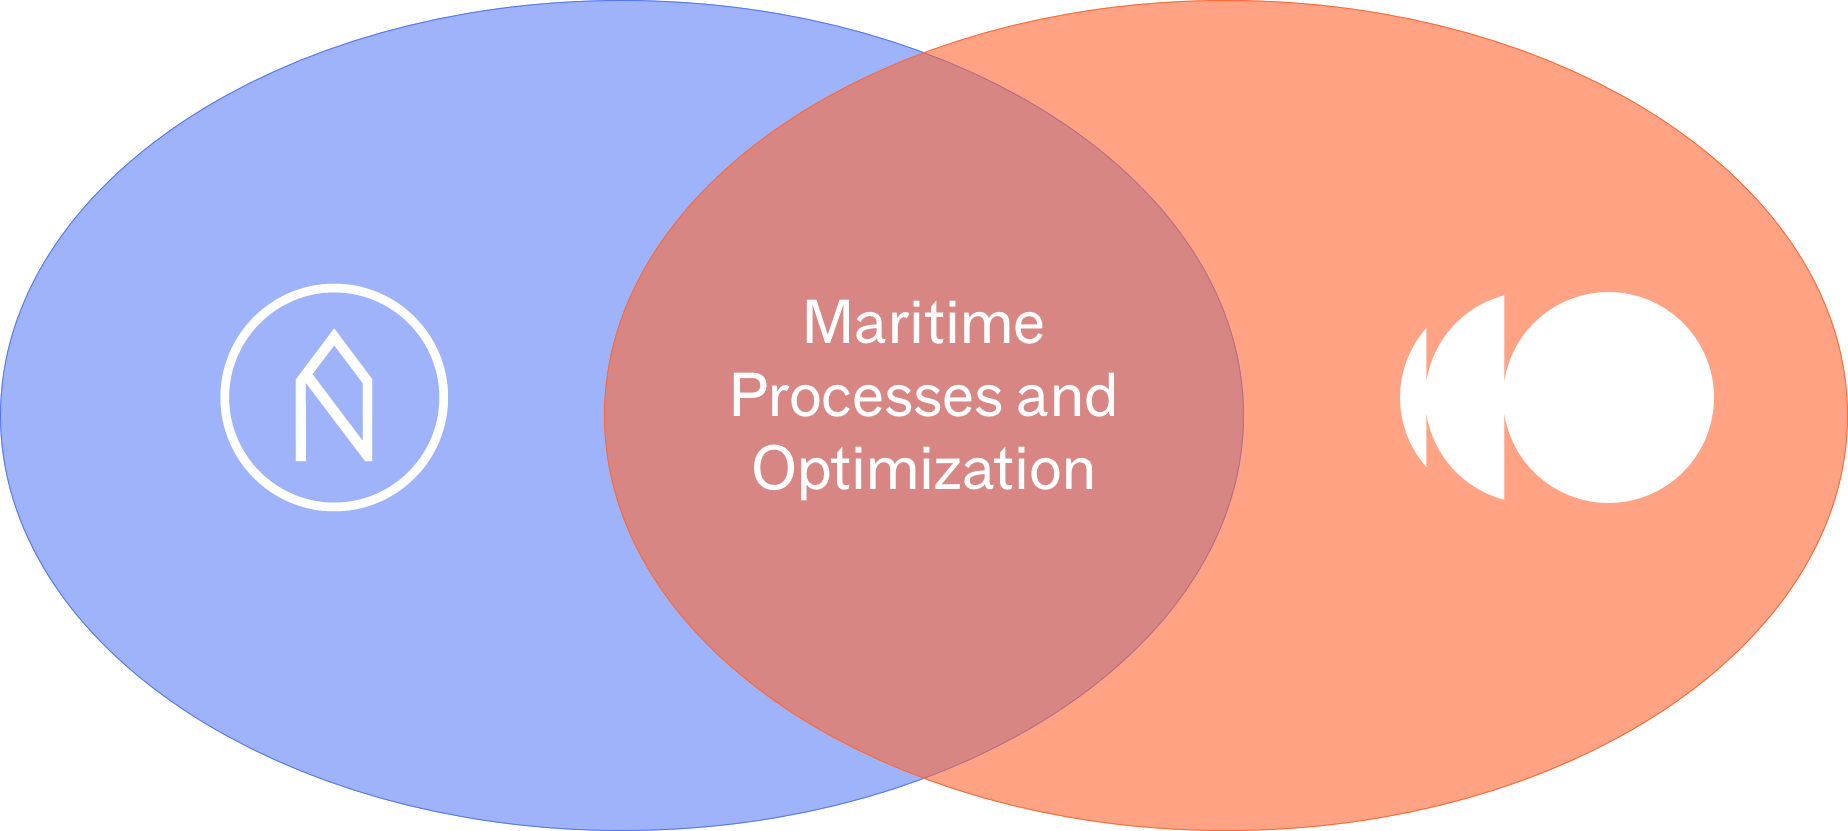 Maritime Processes and Optimization